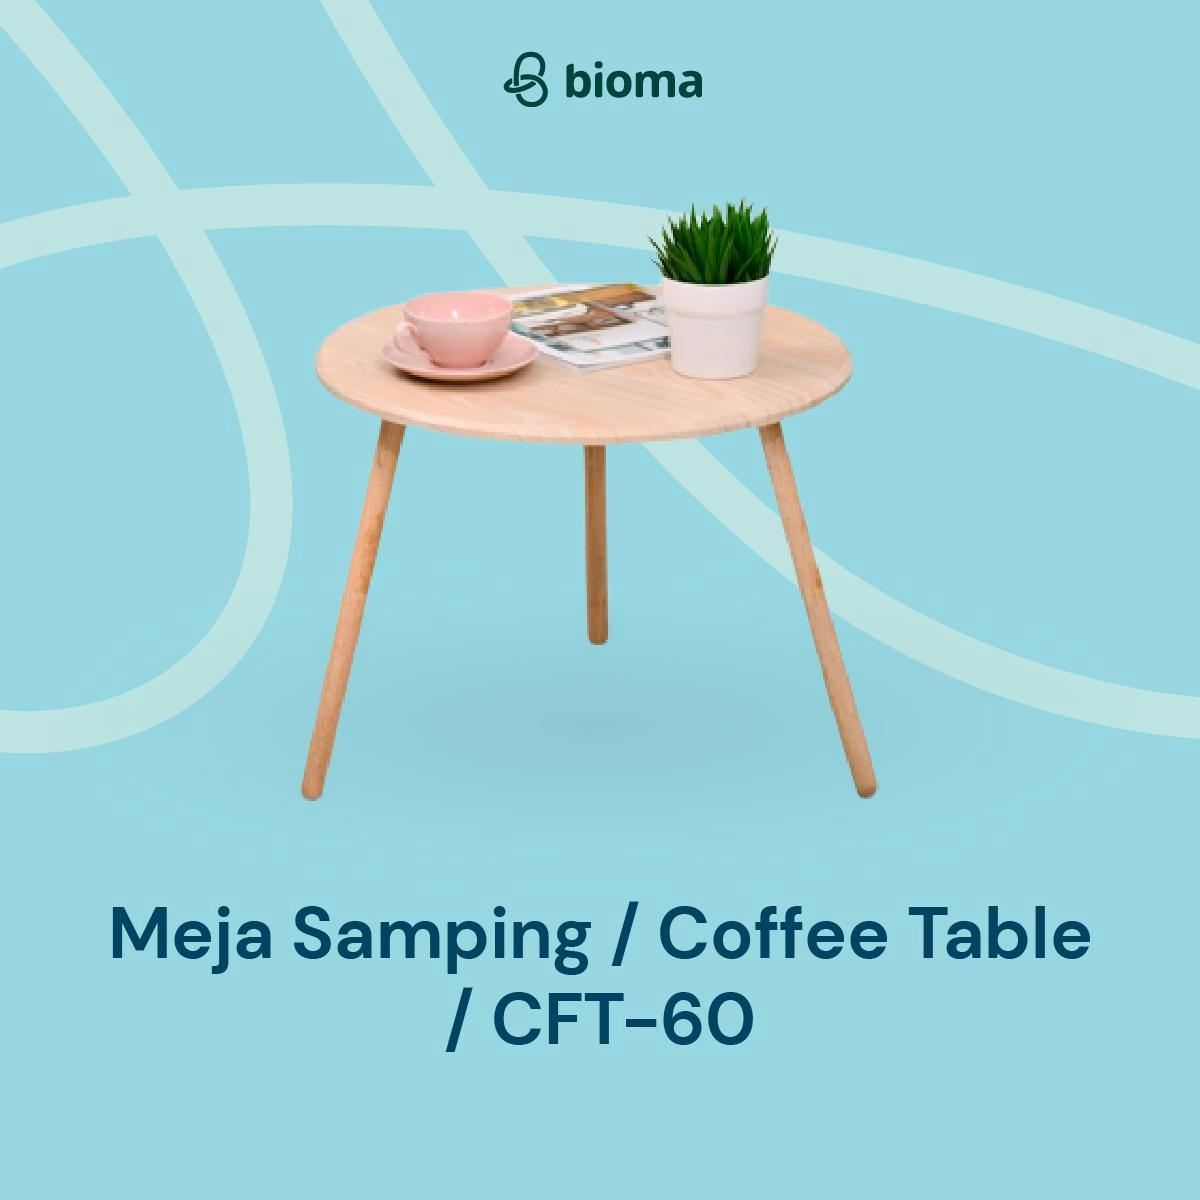 Image 474 Meja Samping / Coffee Table / CFT-60